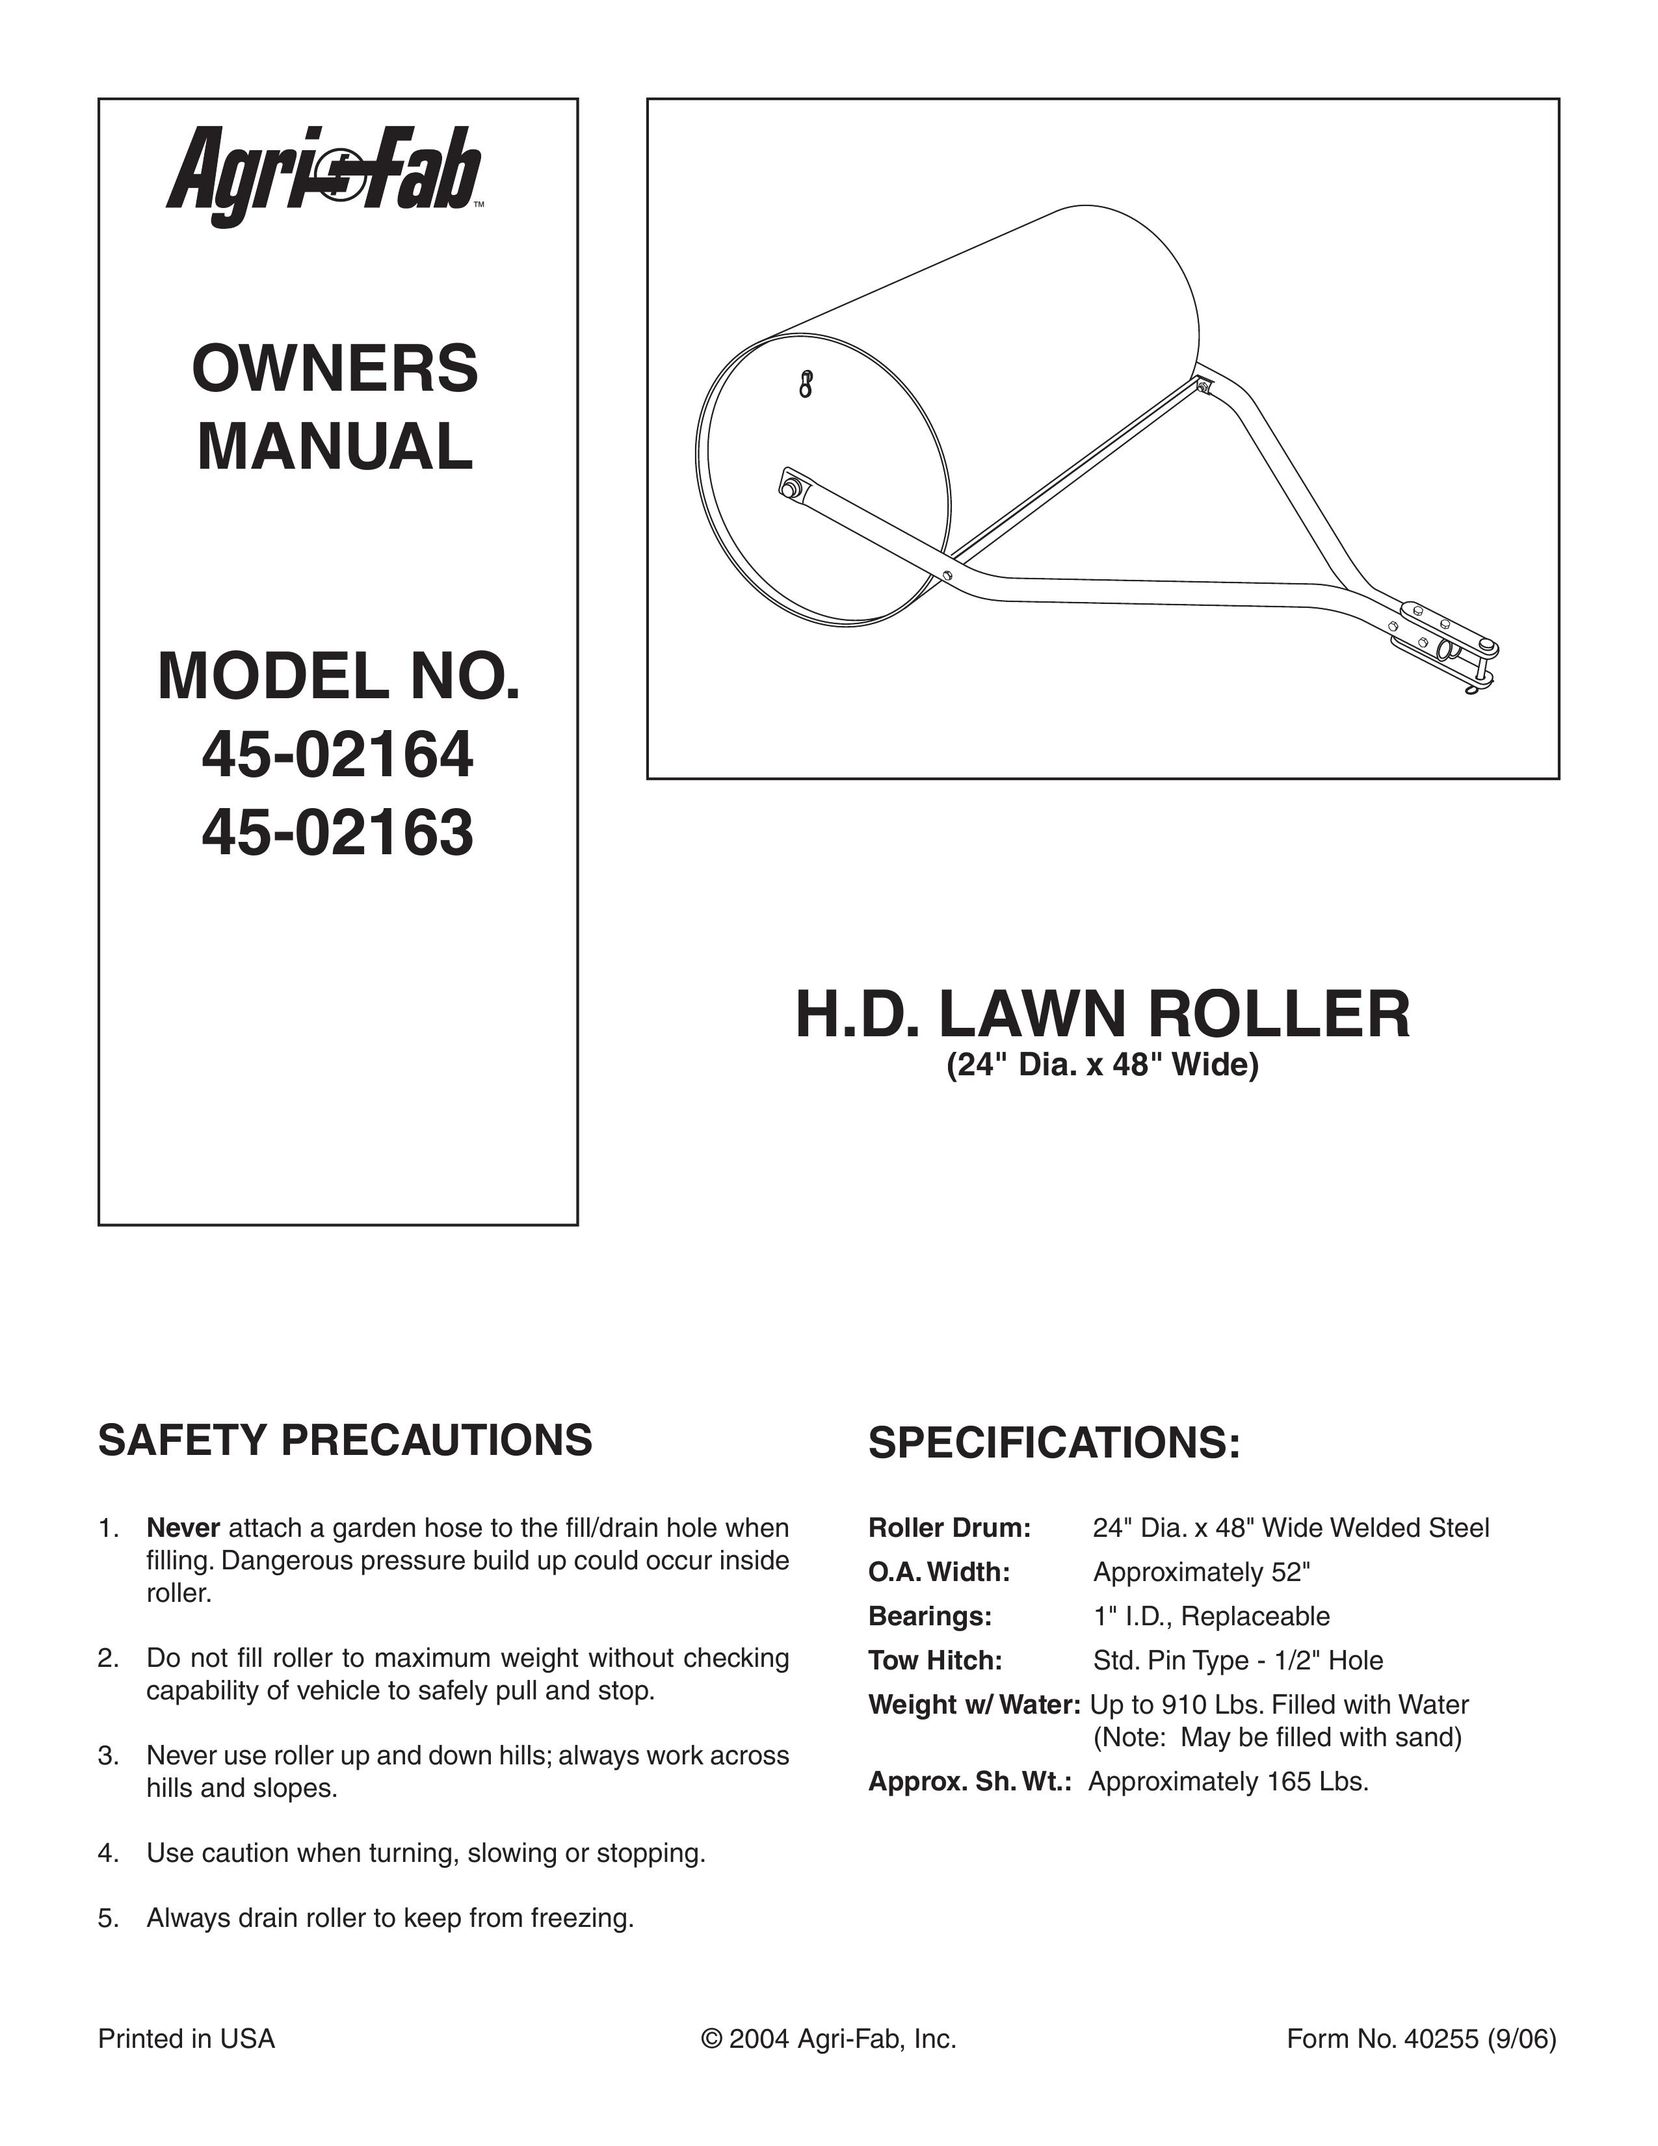 Agri-Fab 45-02163 Power Roller User Manual